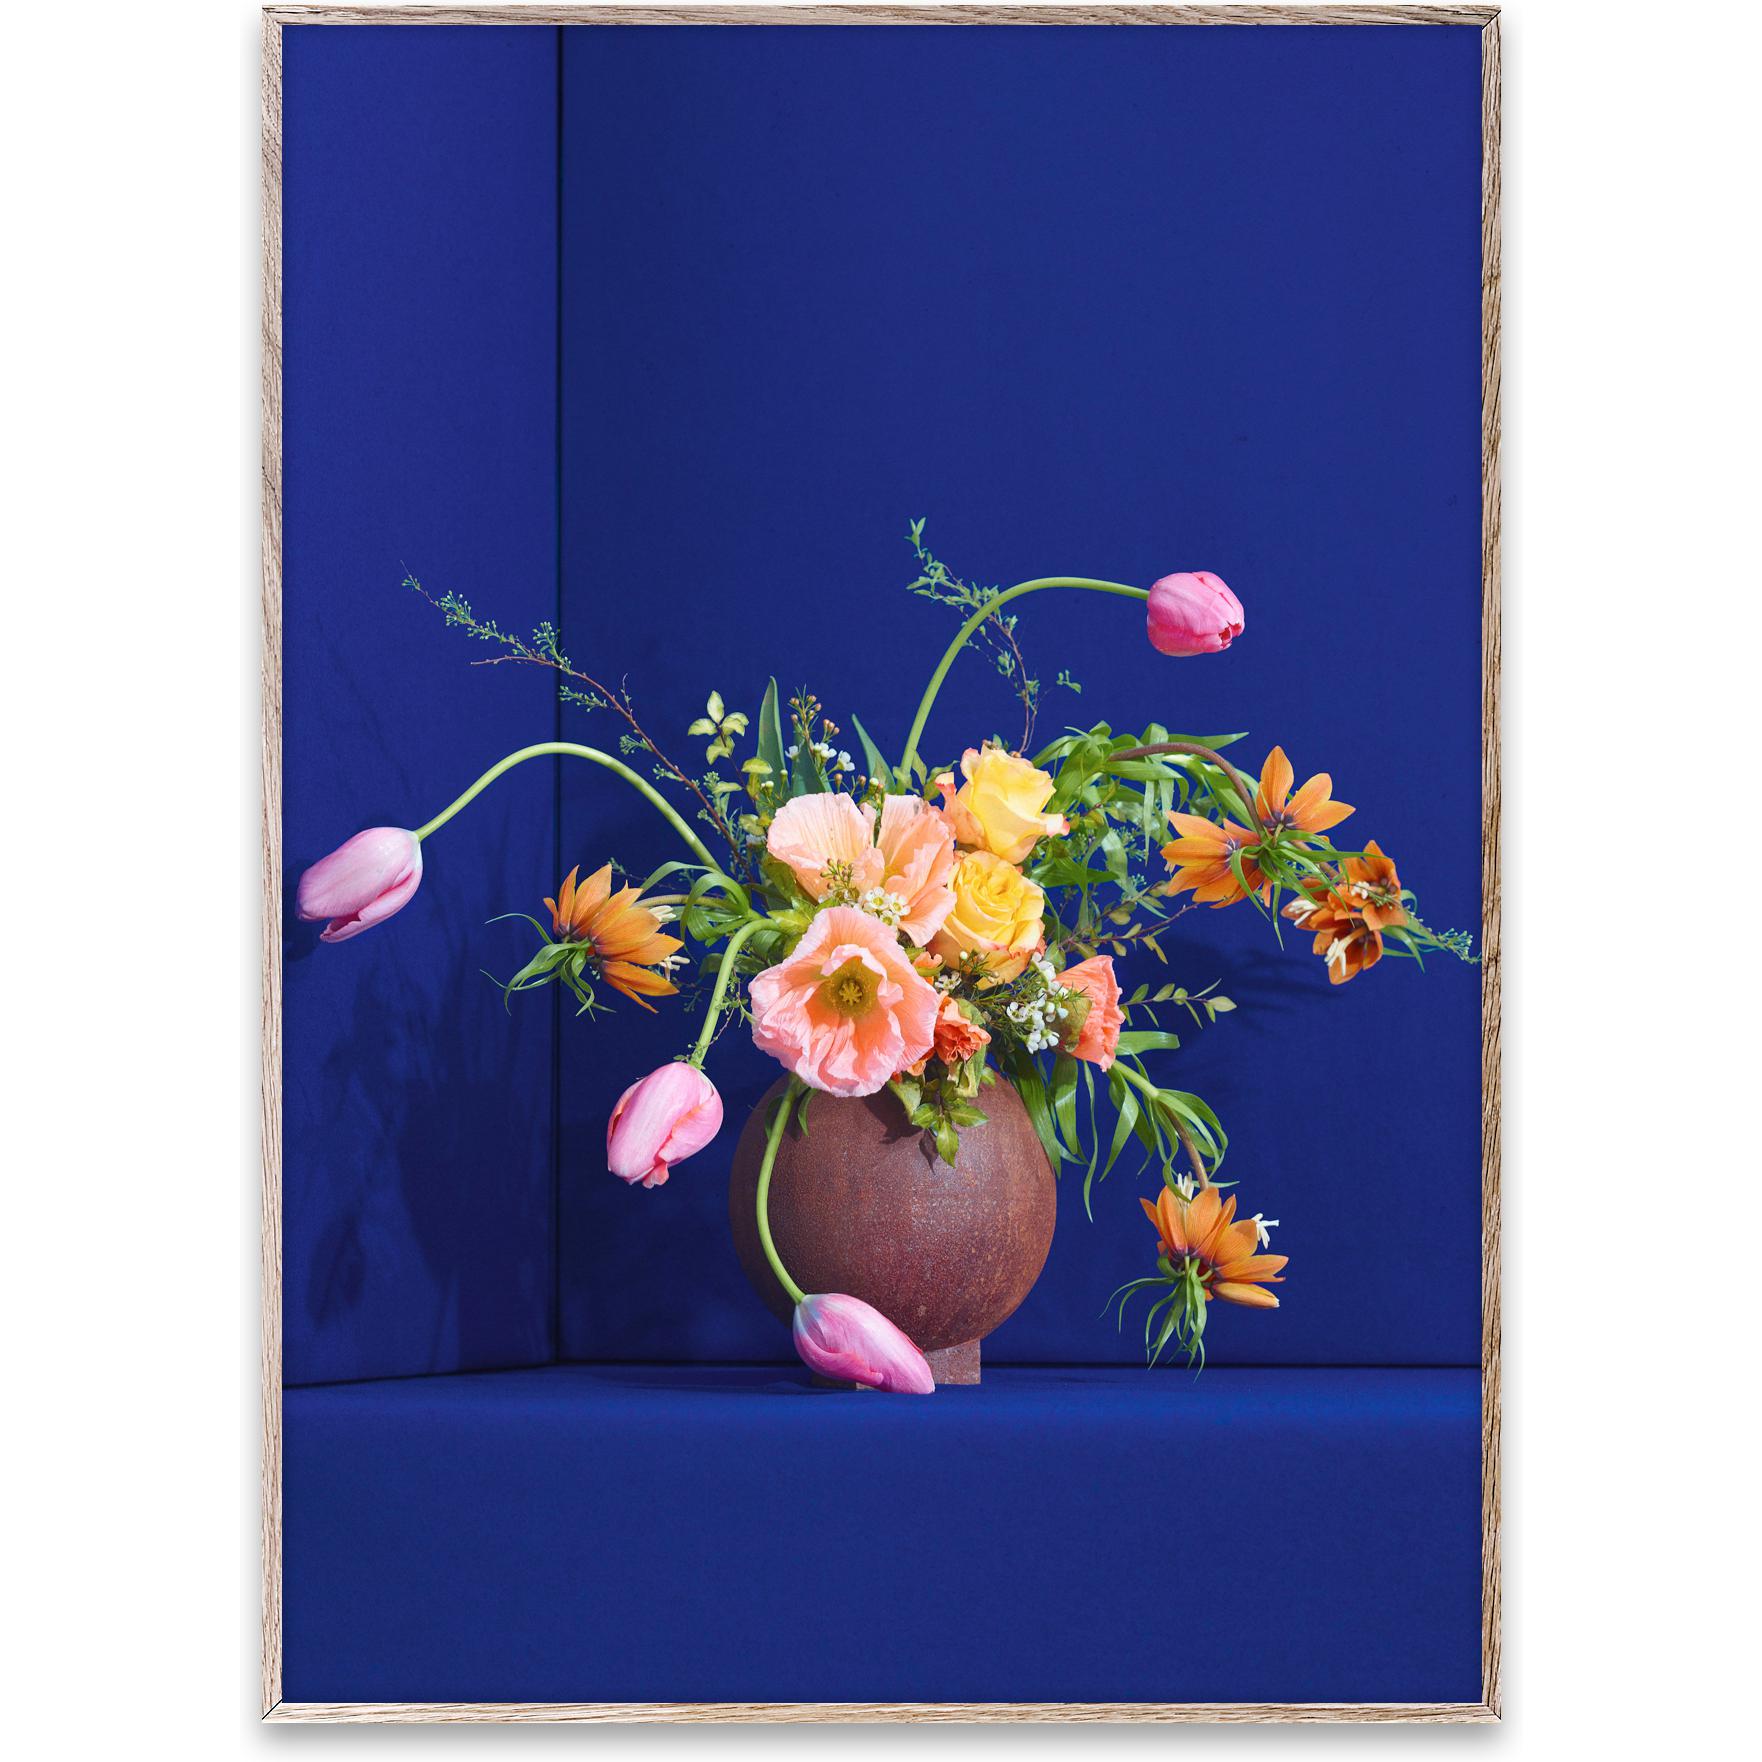 Paper Collective Blomst 01 Poster 50x70 Cm, Blau